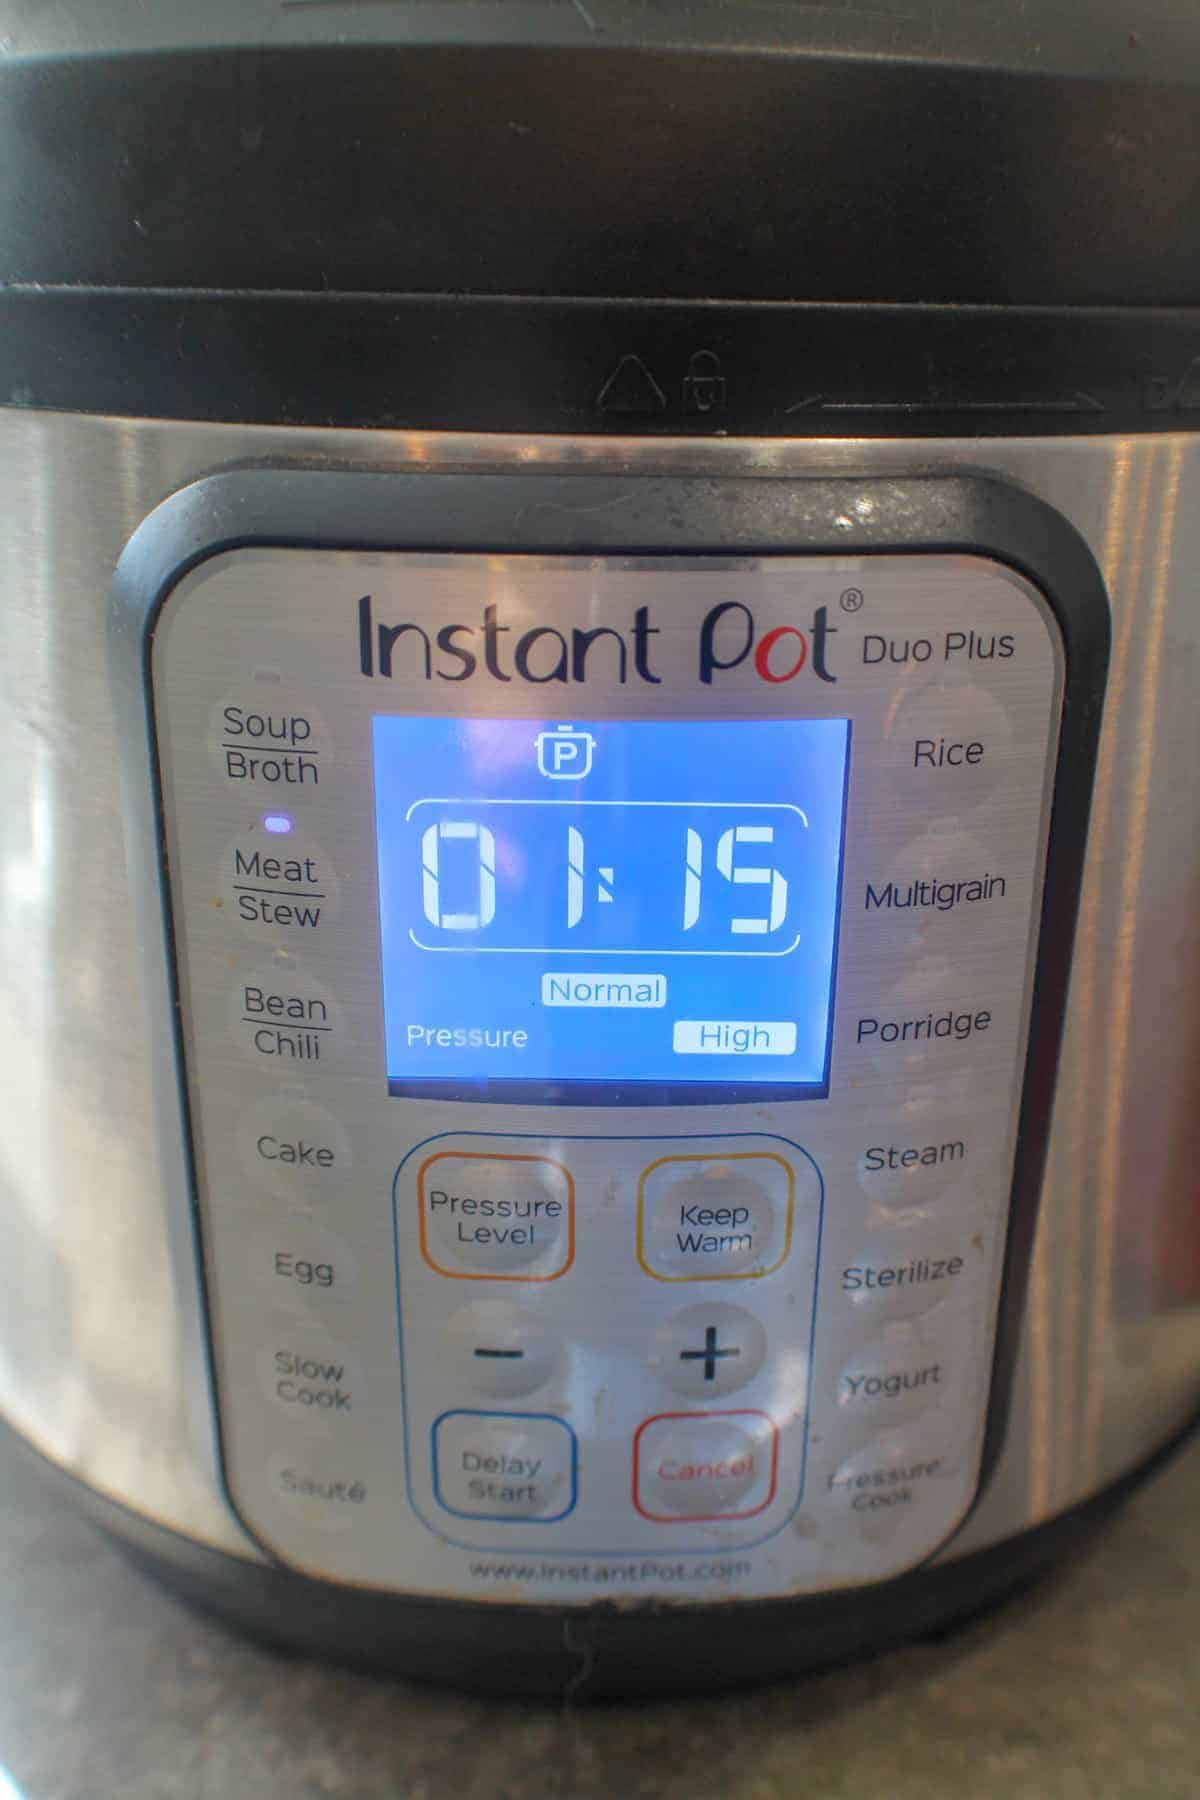 Instant Pot set to 1 hour 15 minutes